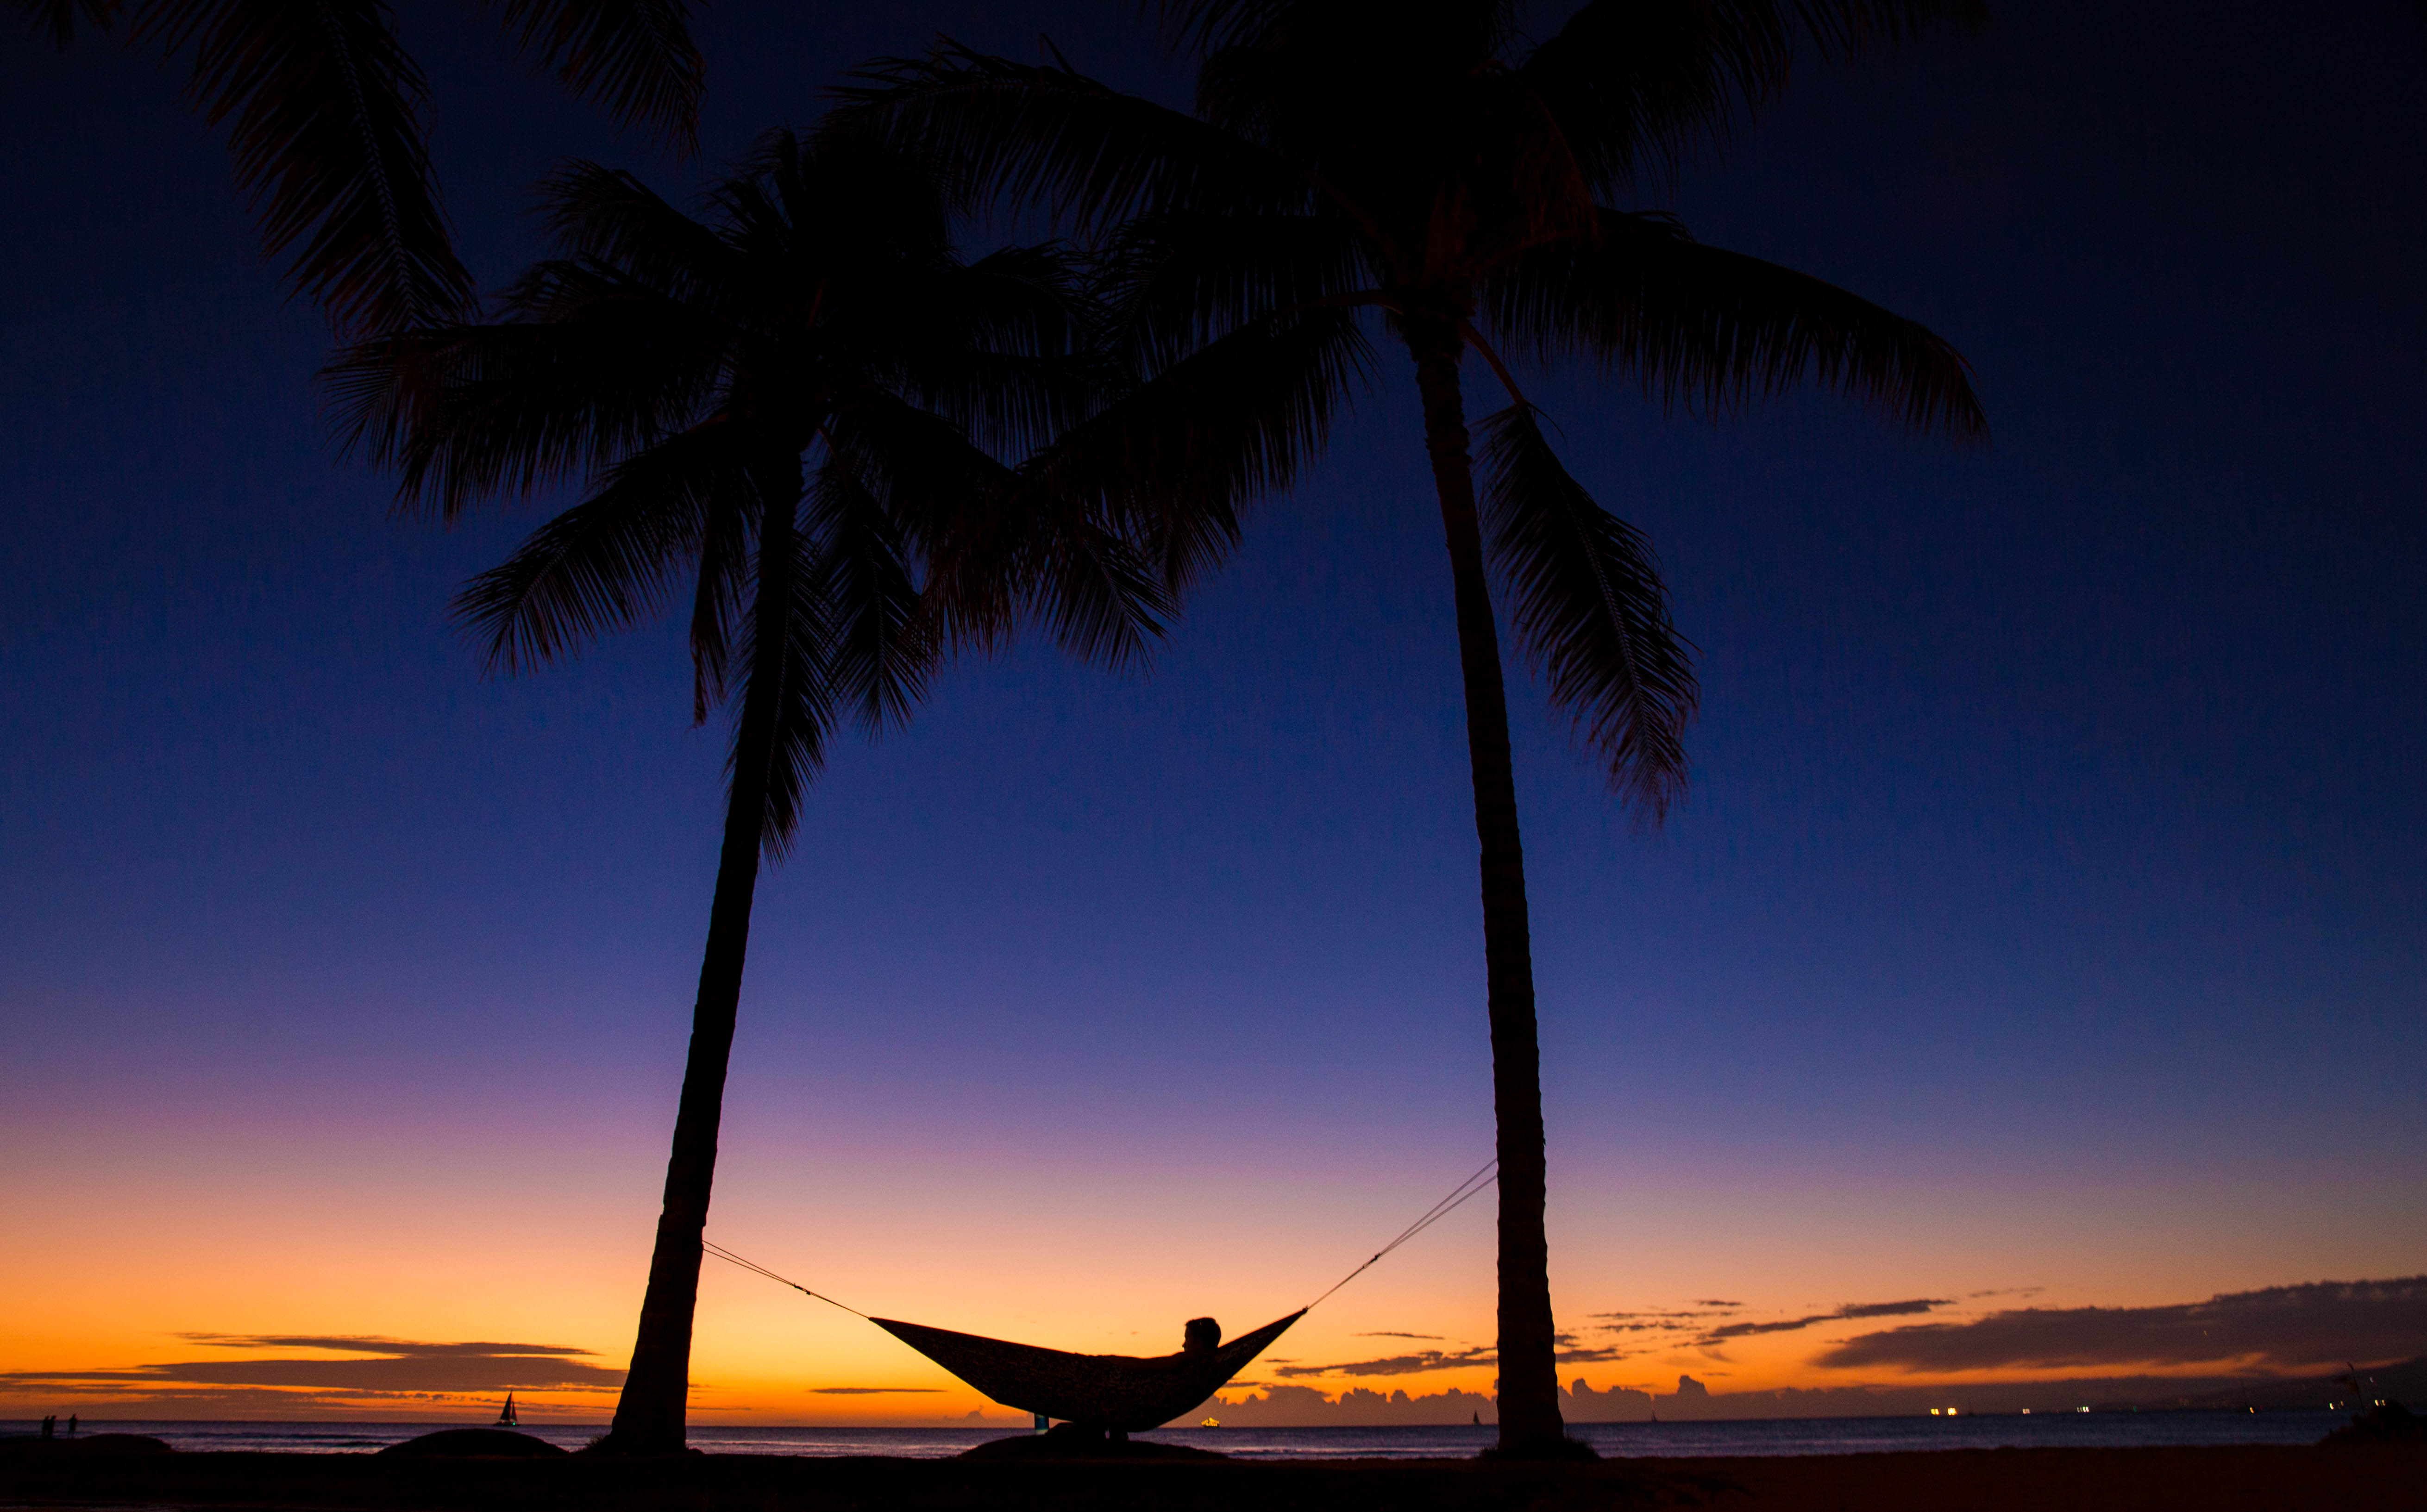 desktop Images night, palms, dark, silhouettes, relaxation, rest, tropics, hammock